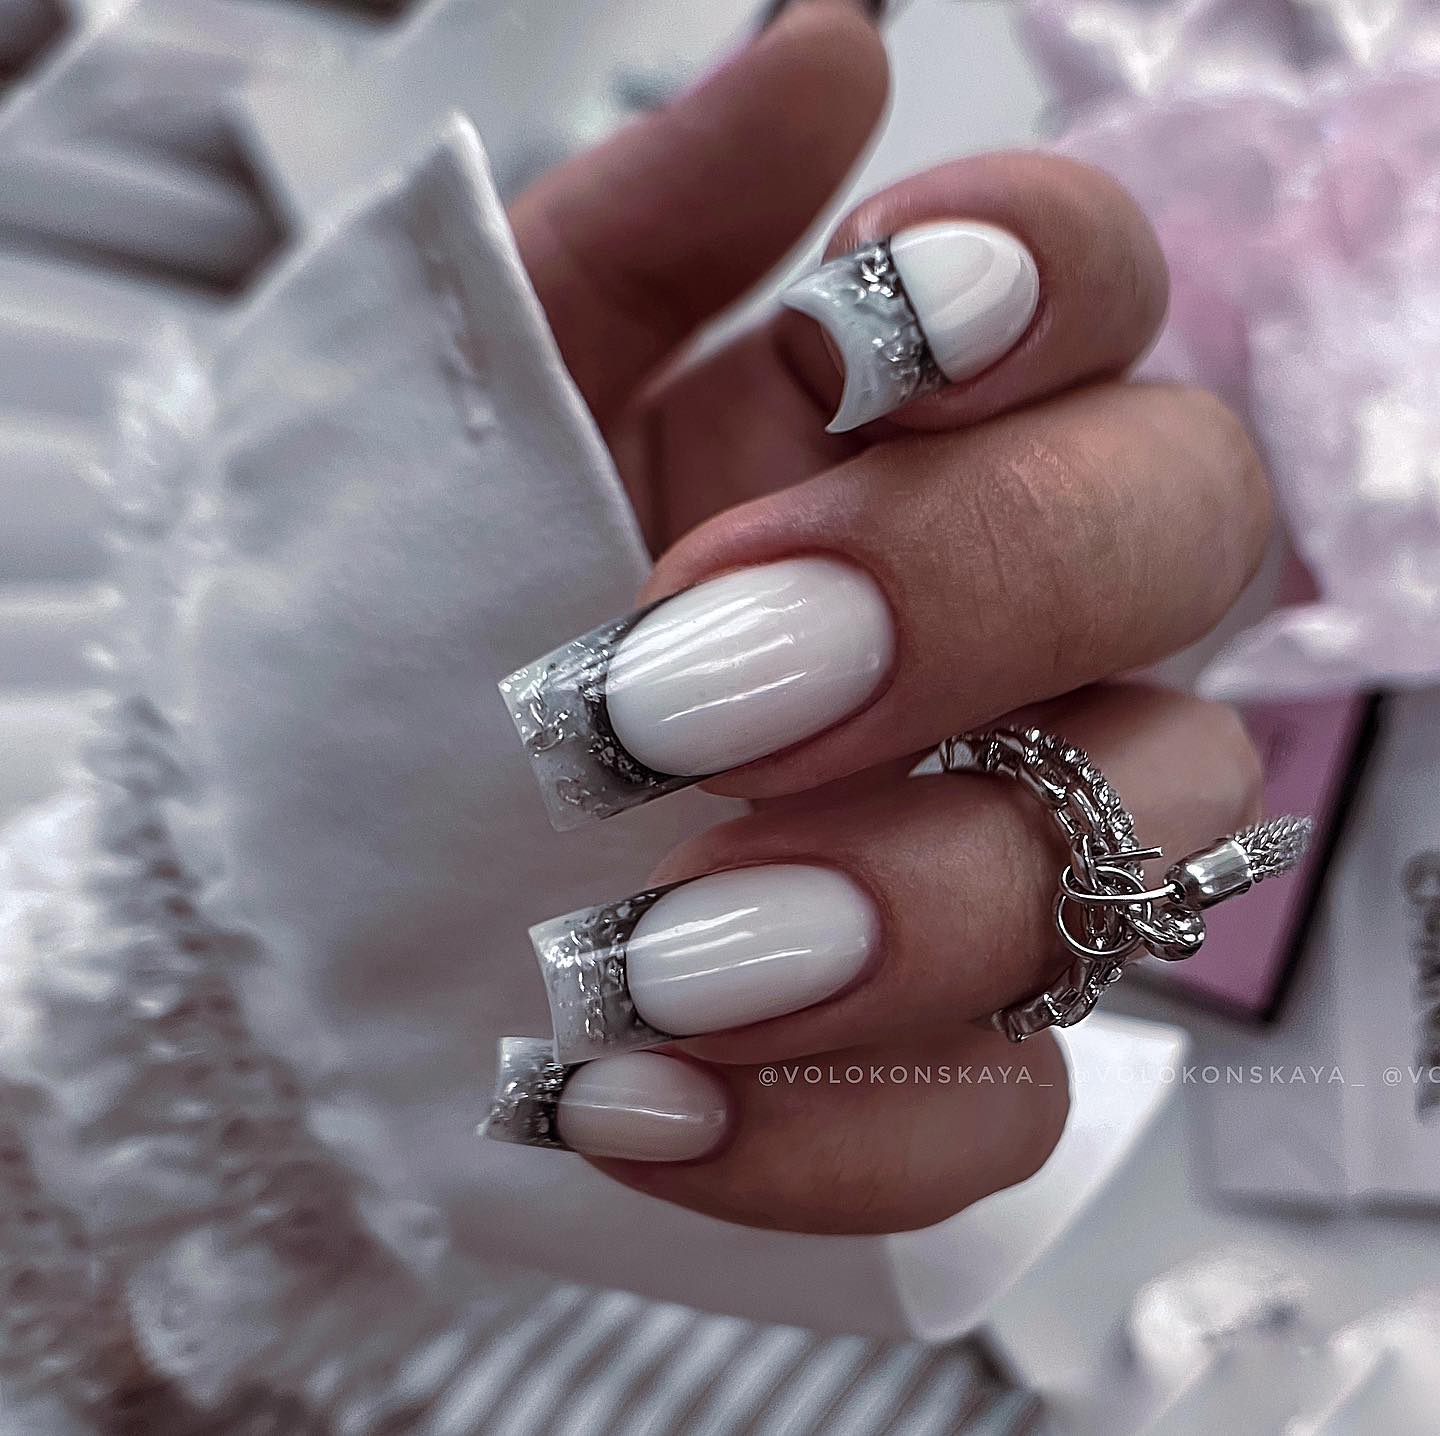 Black and white goth nails